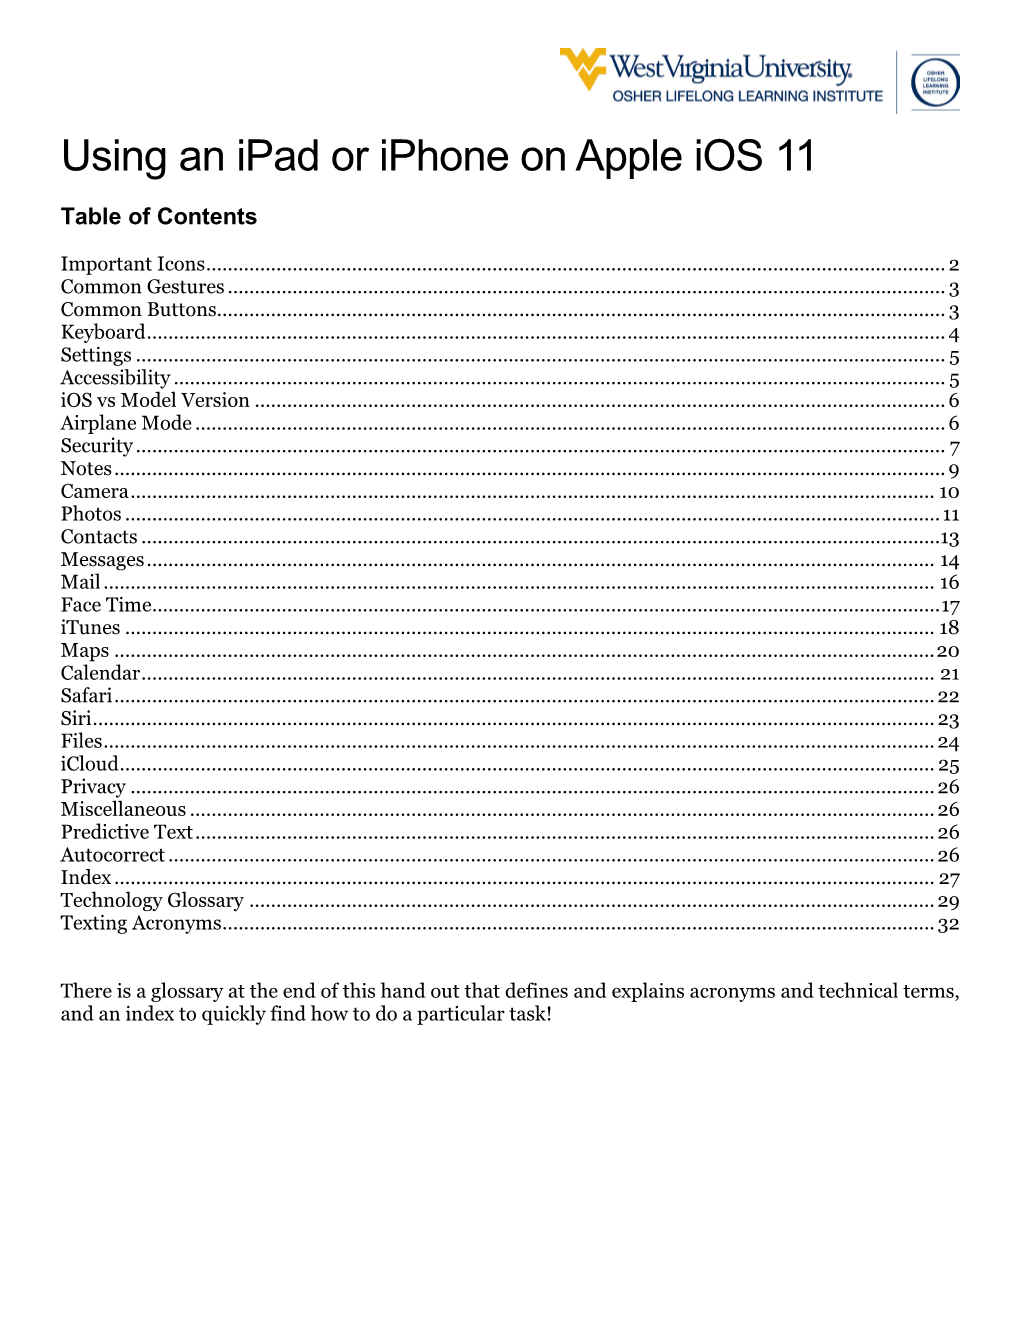 Using an Ipad Or Iphone on Apple Ios 11